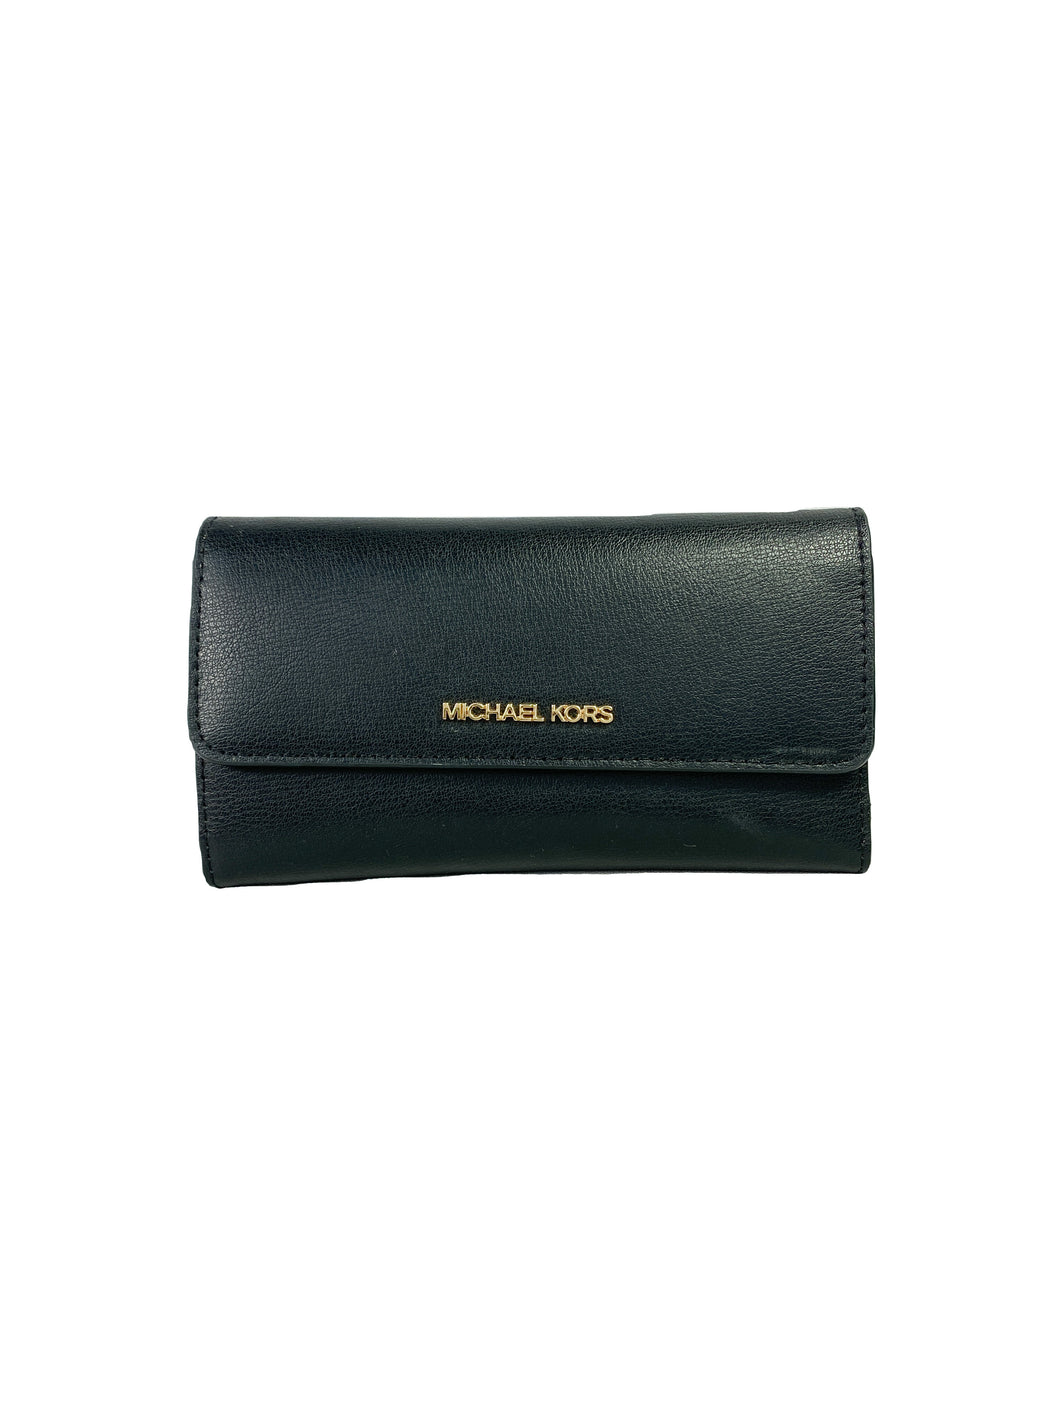 Michael Kors black leather foldover wallet